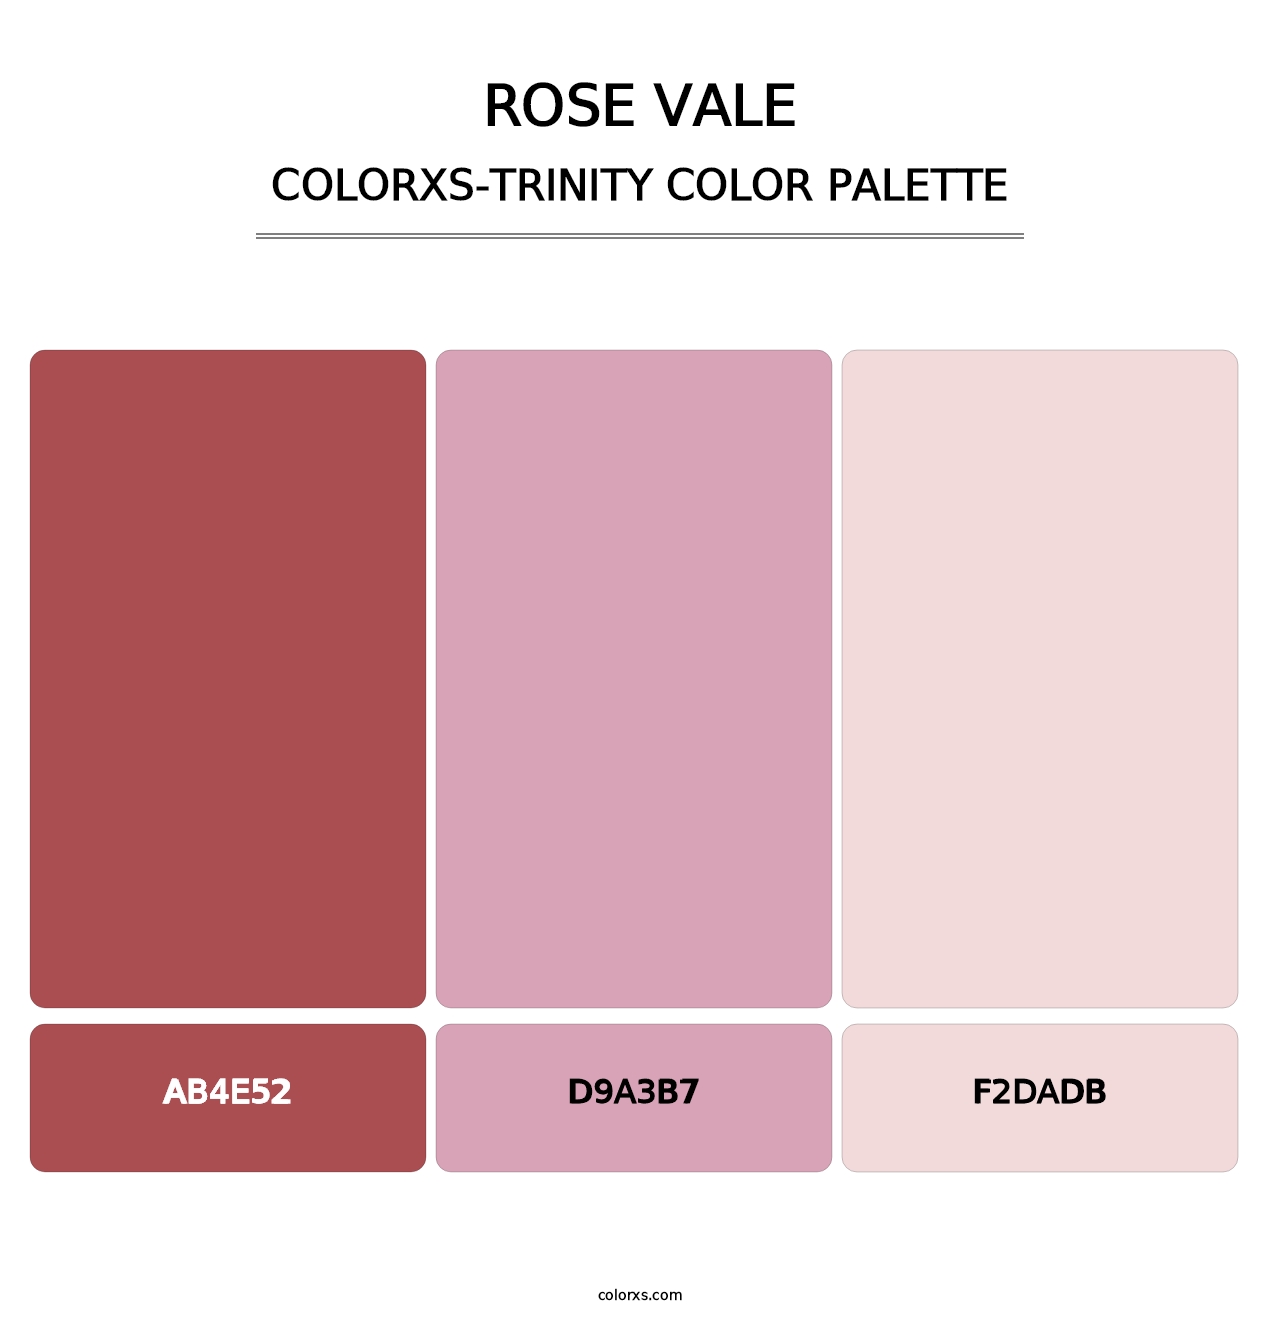 Rose Vale - Colorxs Trinity Palette